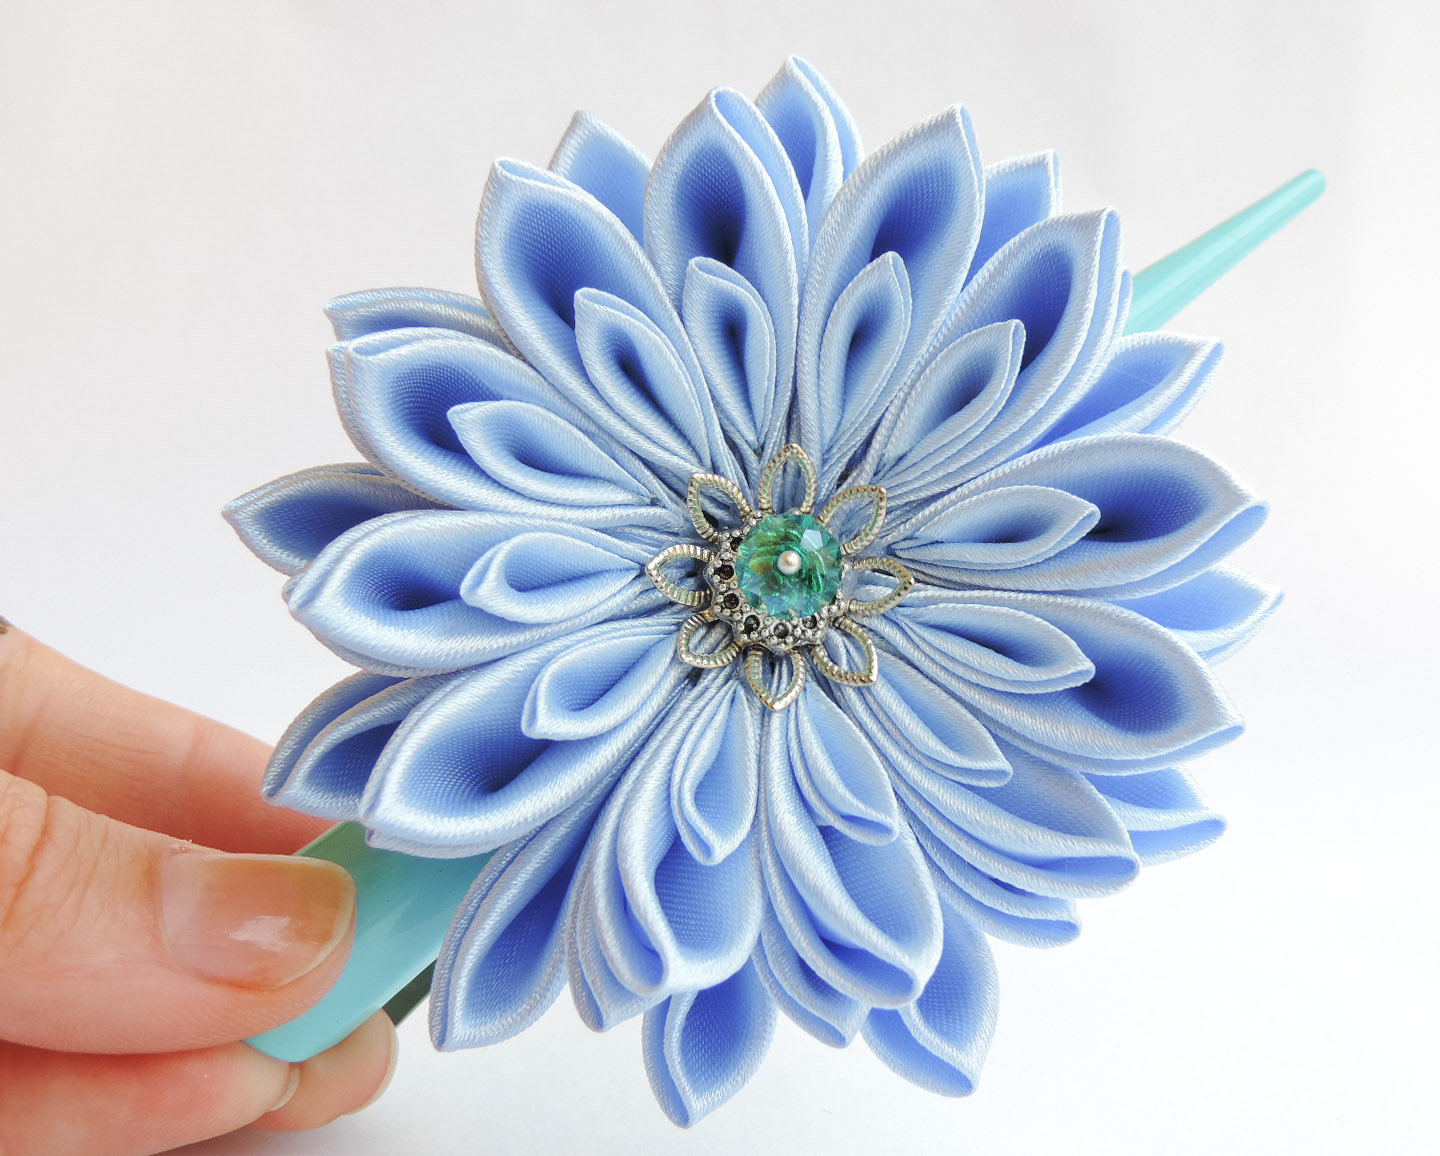 Light blue satin chrysanthemum - DIY tutorial